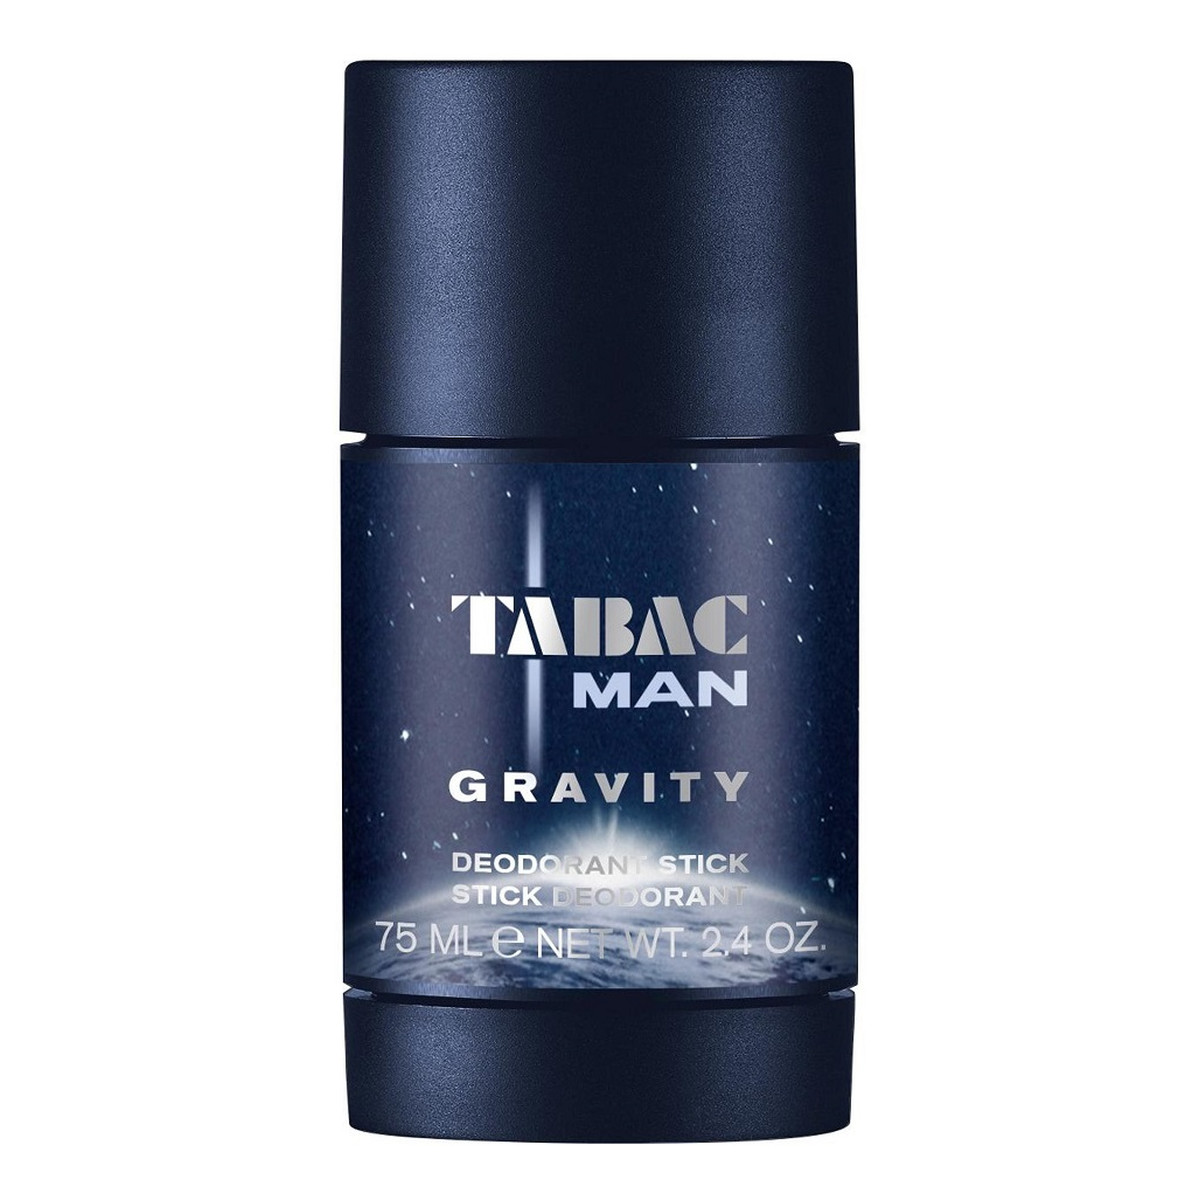 Tabac Man Gravity Dezodorant sztyft 75ml